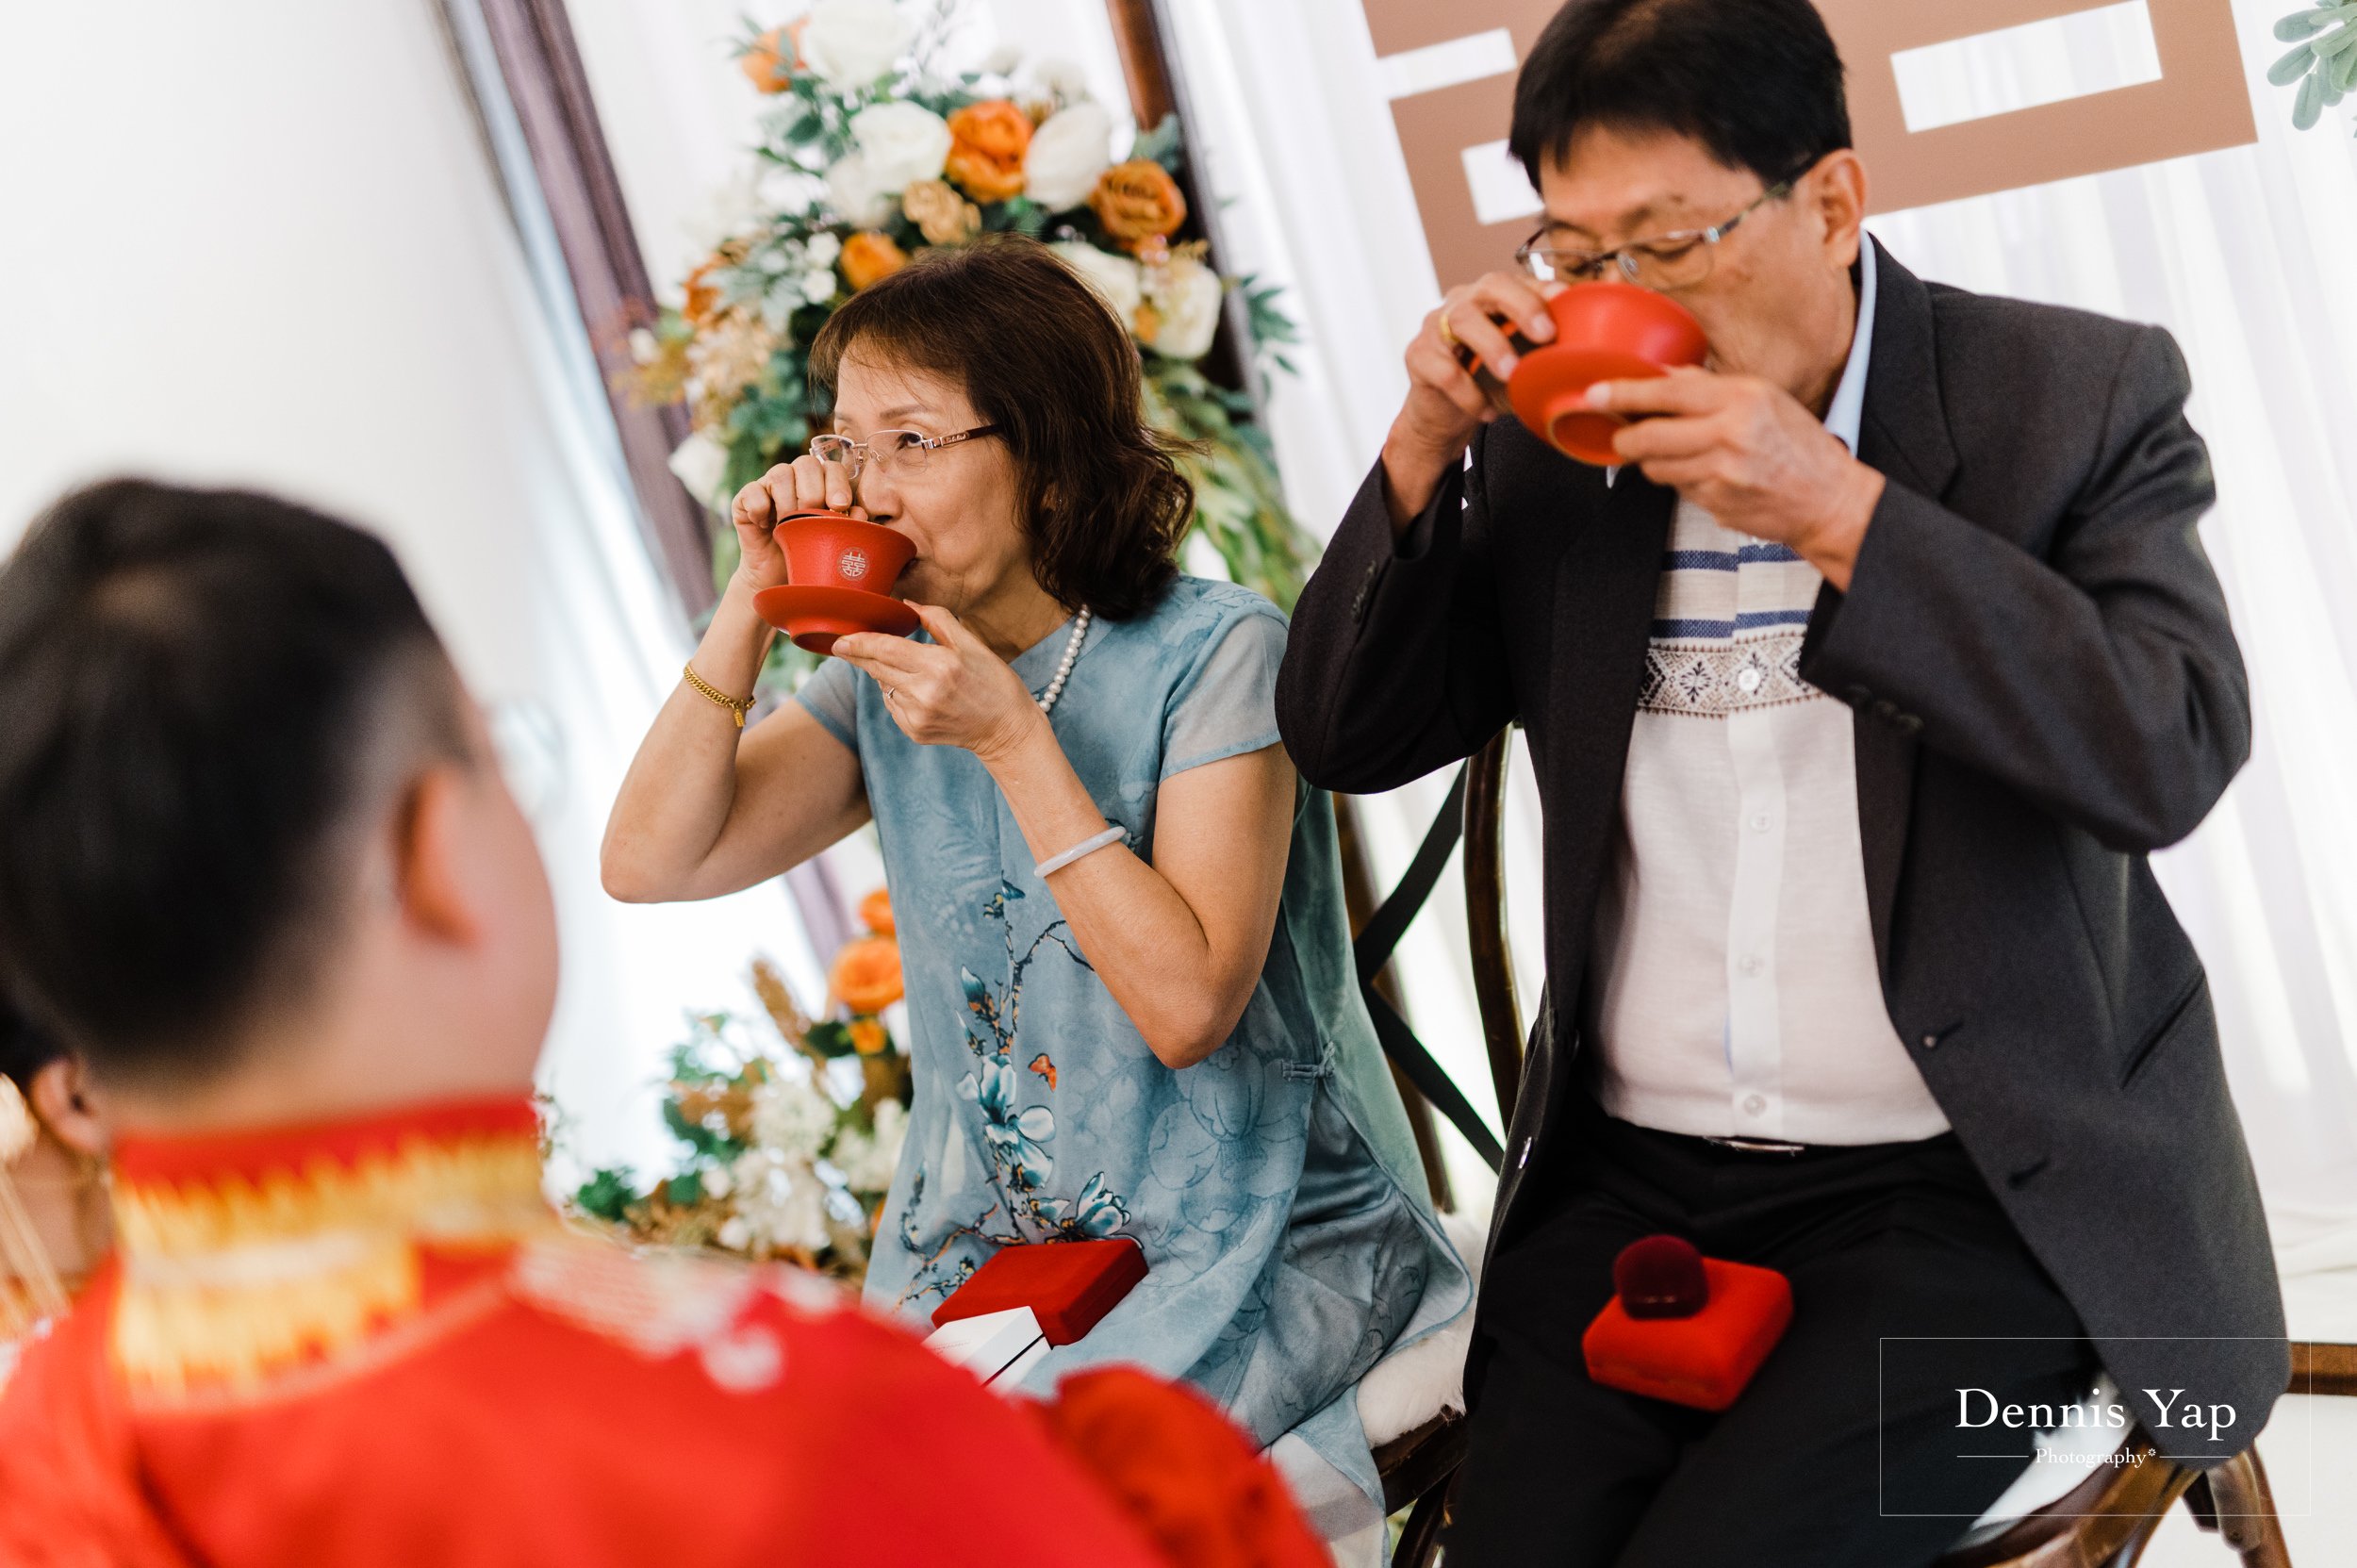 kenny shin jin wedding day gate crash dennis yap photography colors-29.jpg